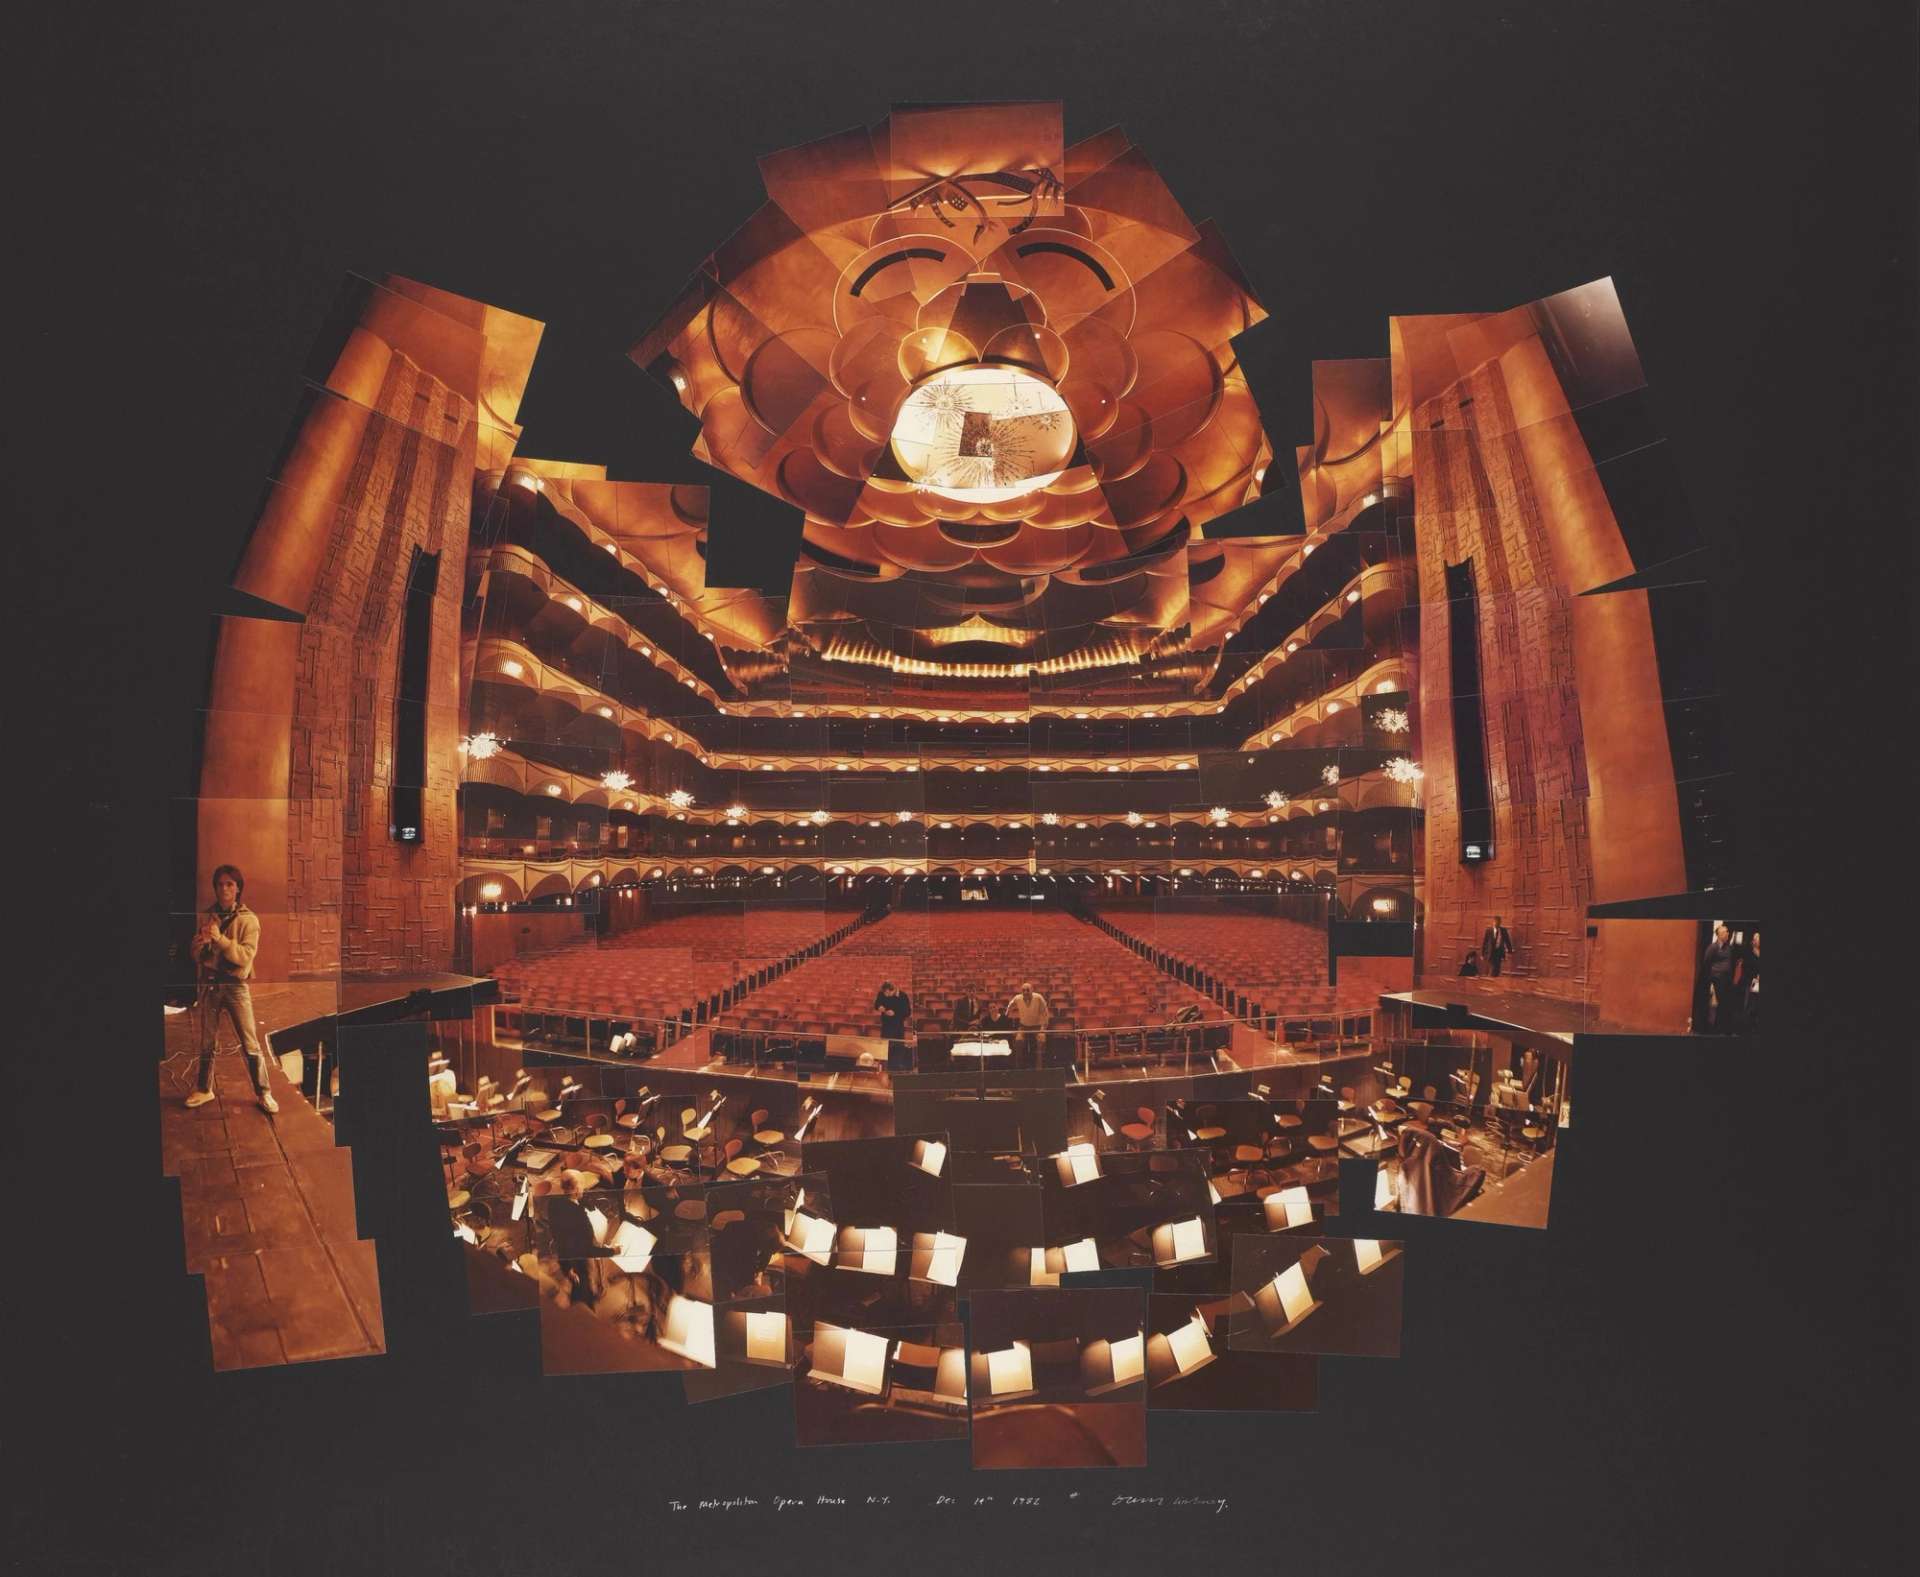 David Hockney's The Metropolitan Opera House. A photo collage of an interior of the Metropolitan Opera House